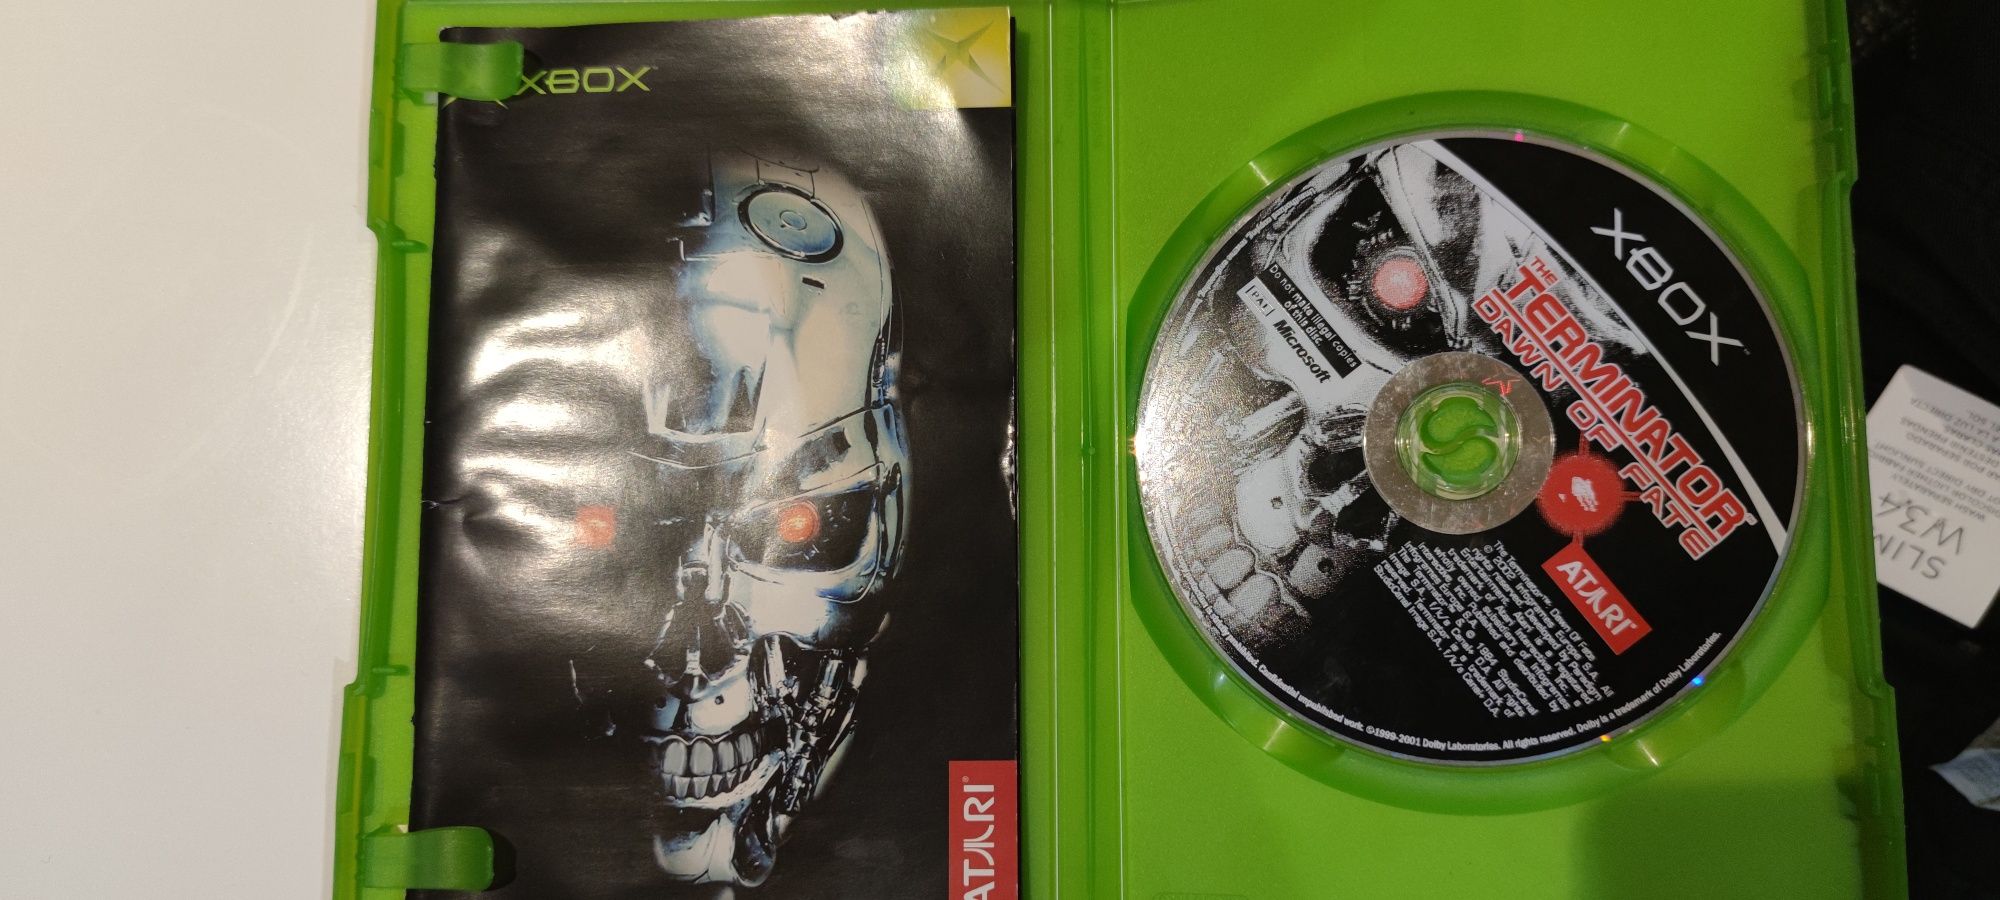 The Terminator Dawn of Fate - Xbox- Excelente estado